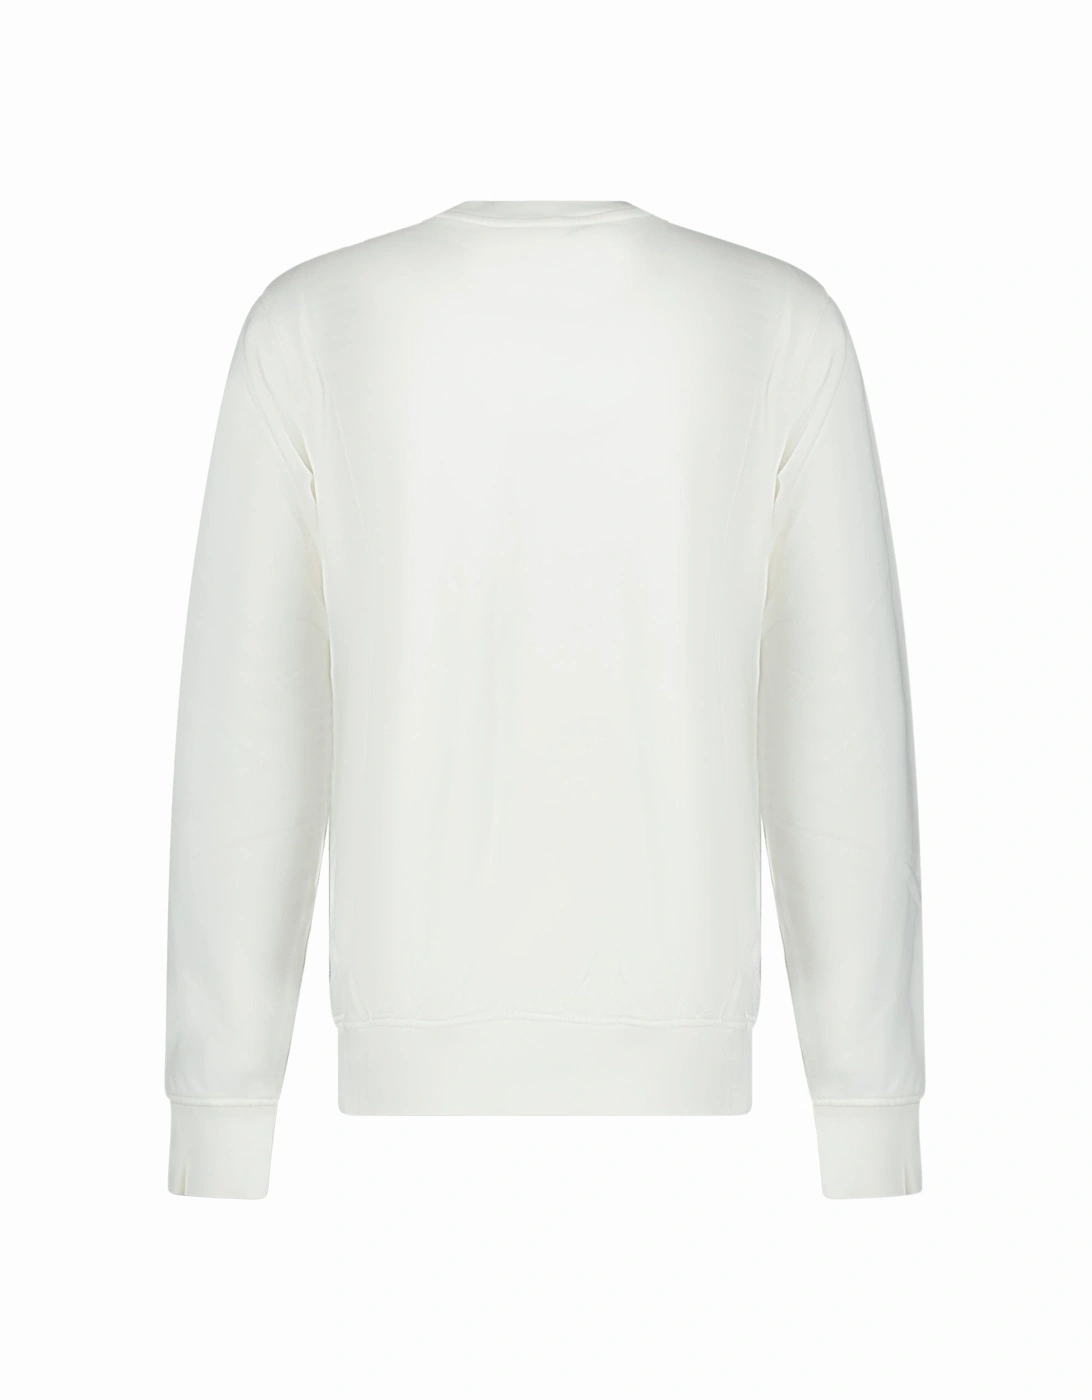 Par Avion Screen Printed Sweatshirt White